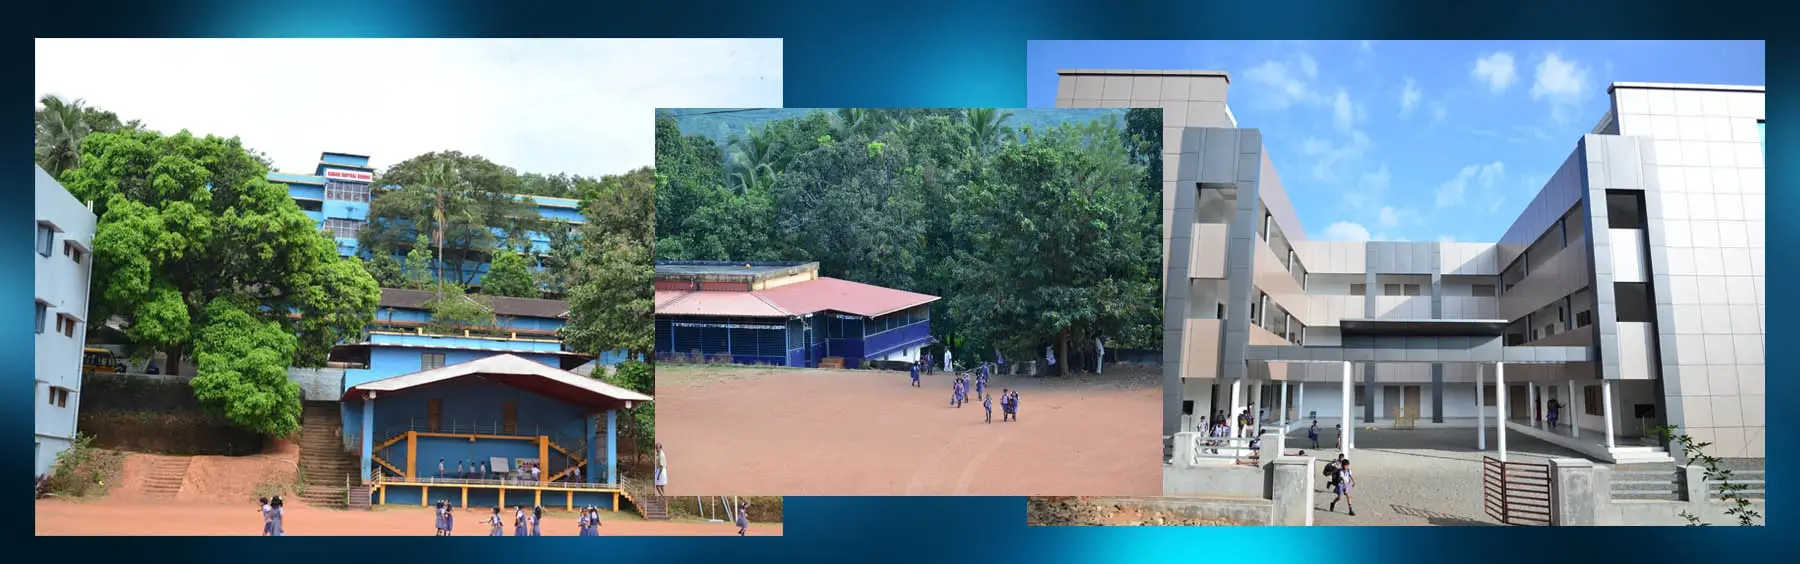 Sabari Central School